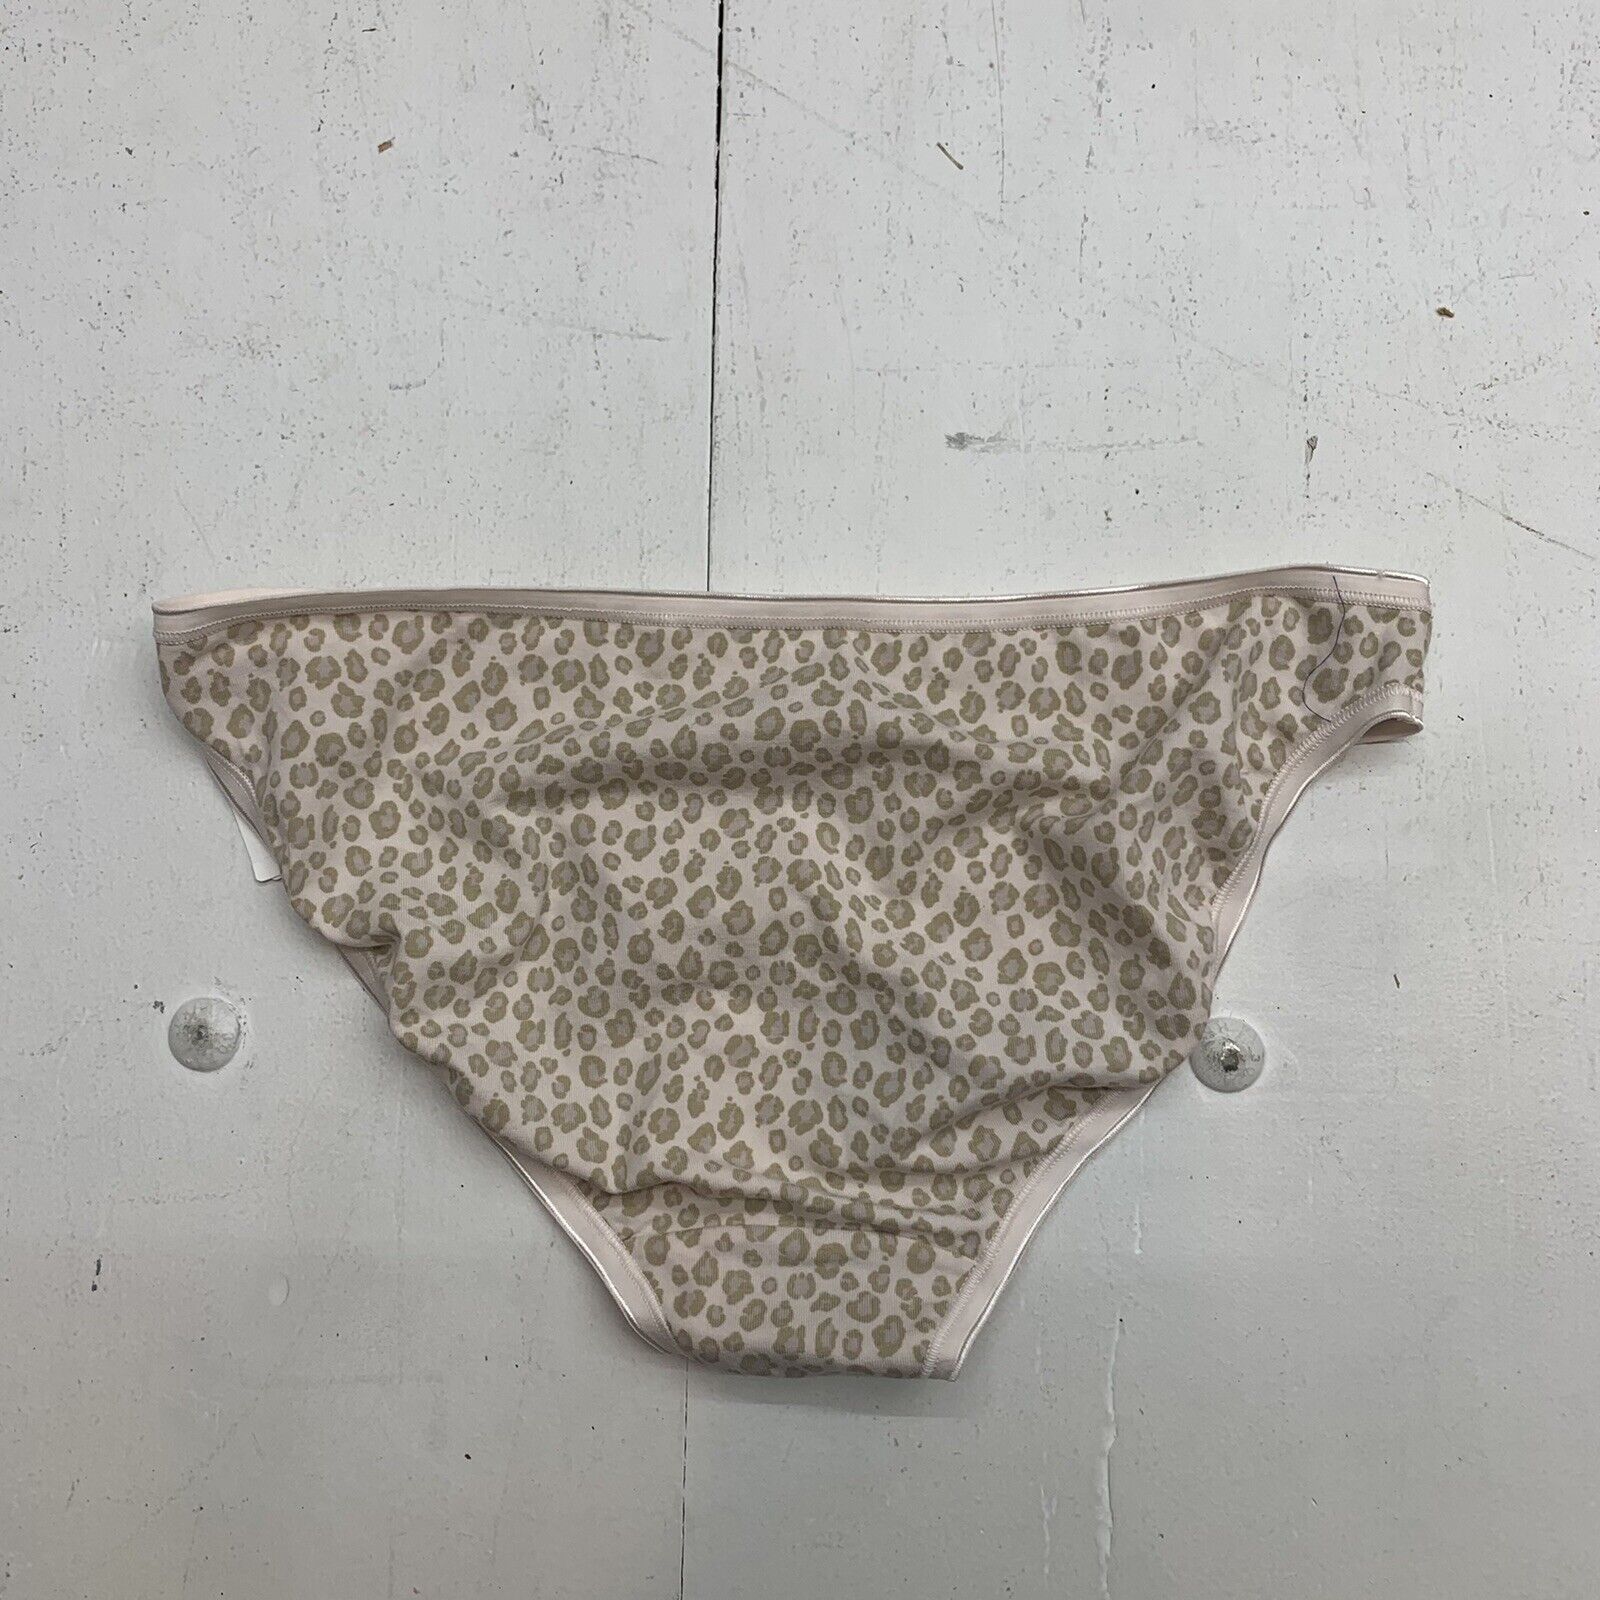 Gap womens blush cheetah print bikini underwear size large - beyond exchange